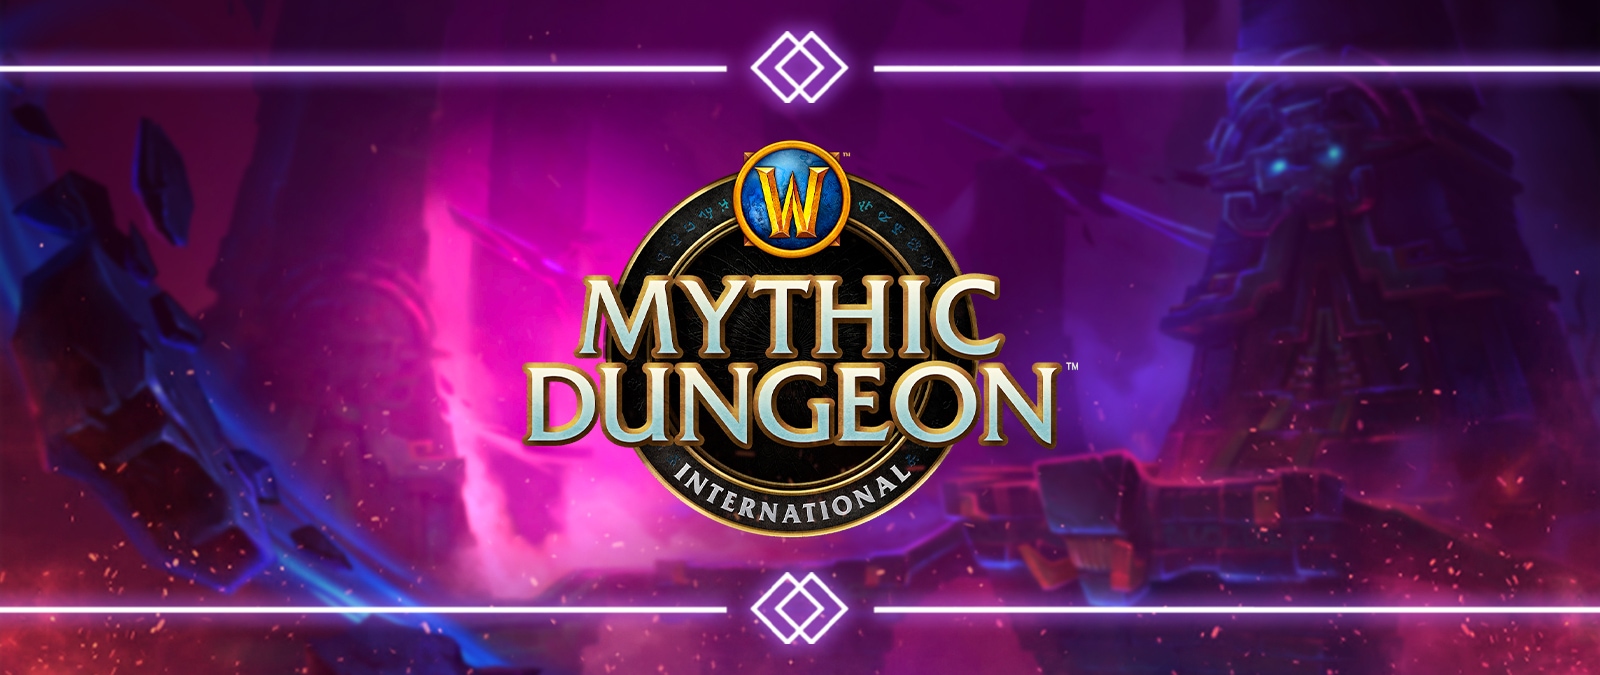 Mythic Dungeon International: Shadowlands Season 2 Begins!